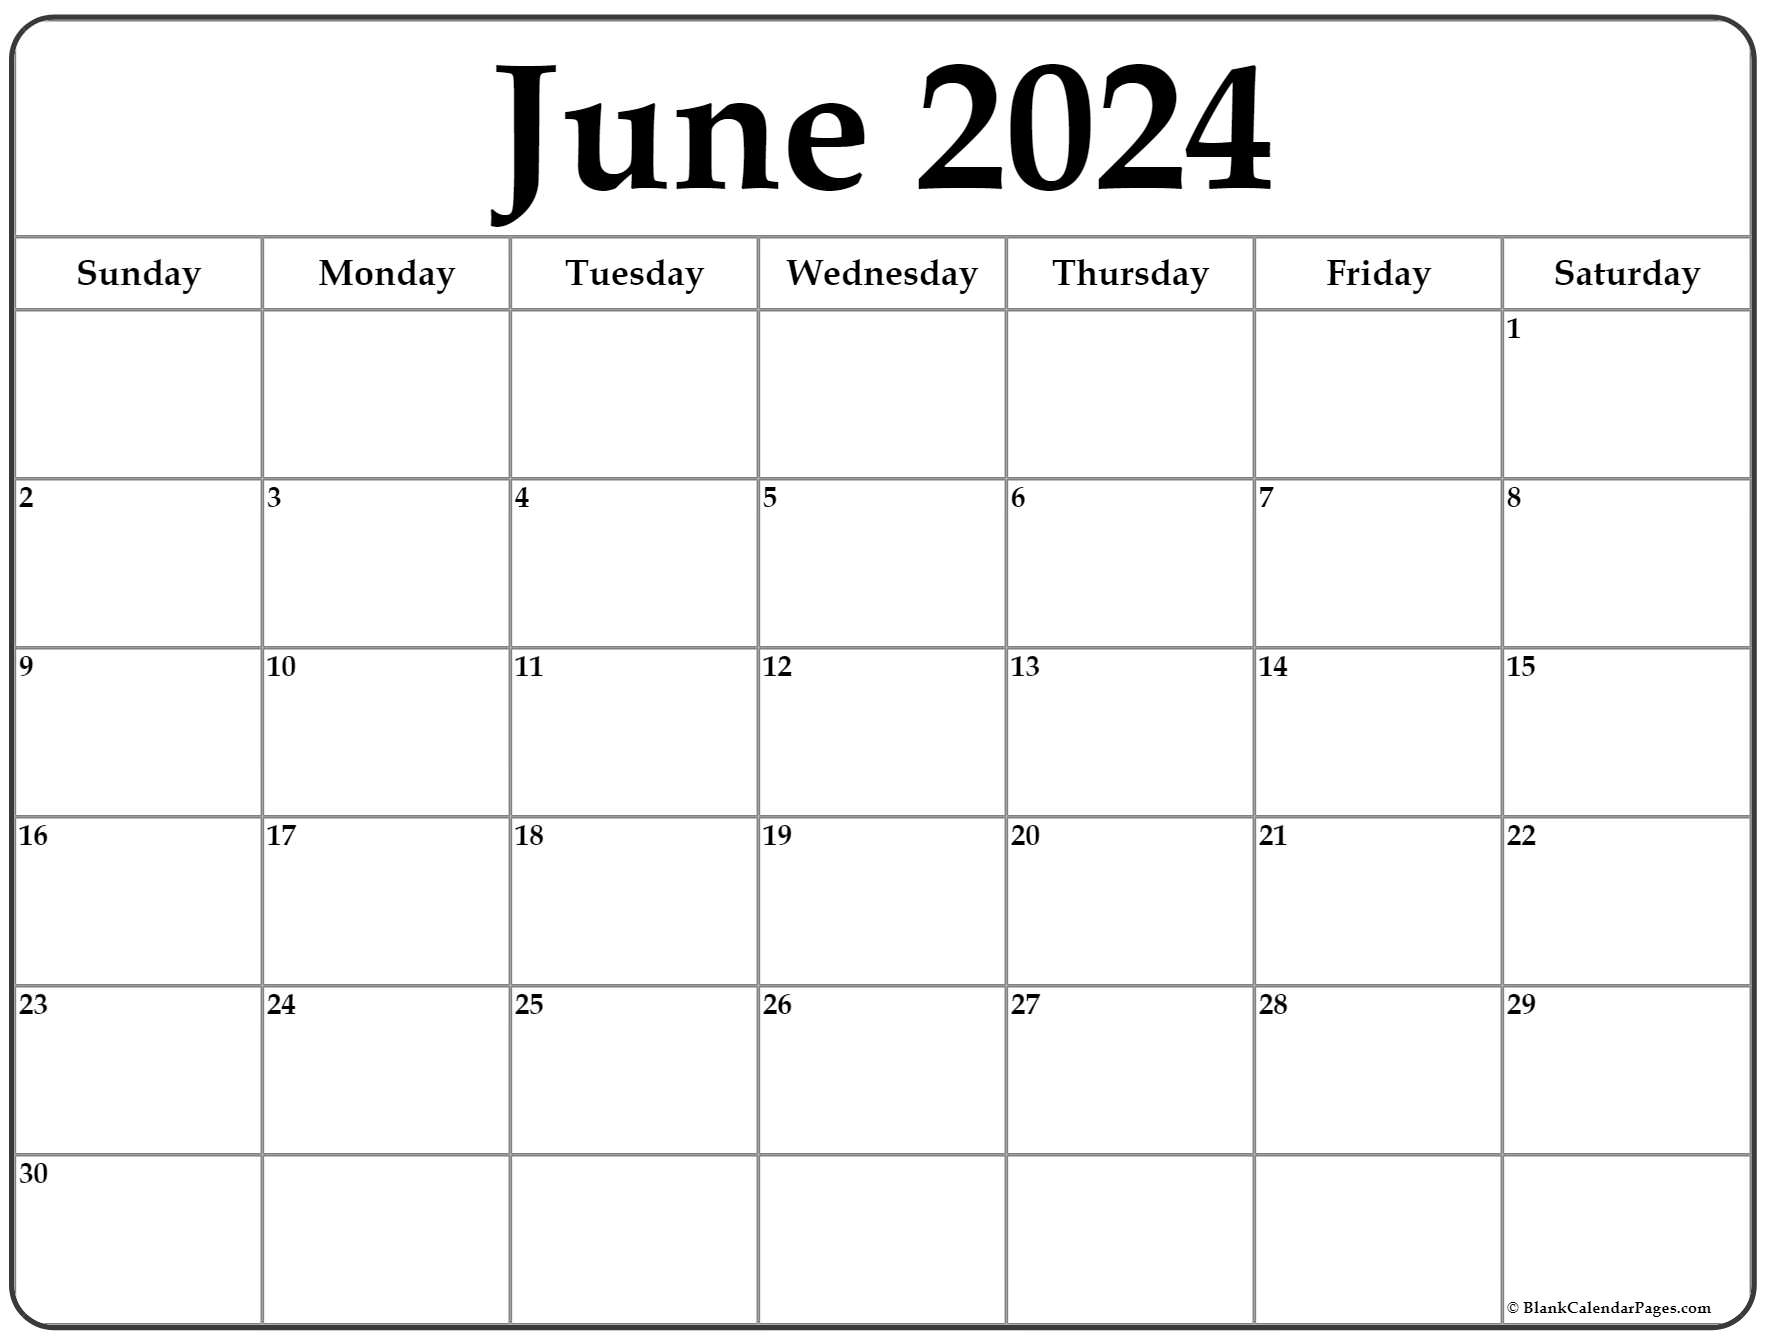 June 2022 Monthly Calendar June 2022 Calendar | Free Printable Calendar Templates